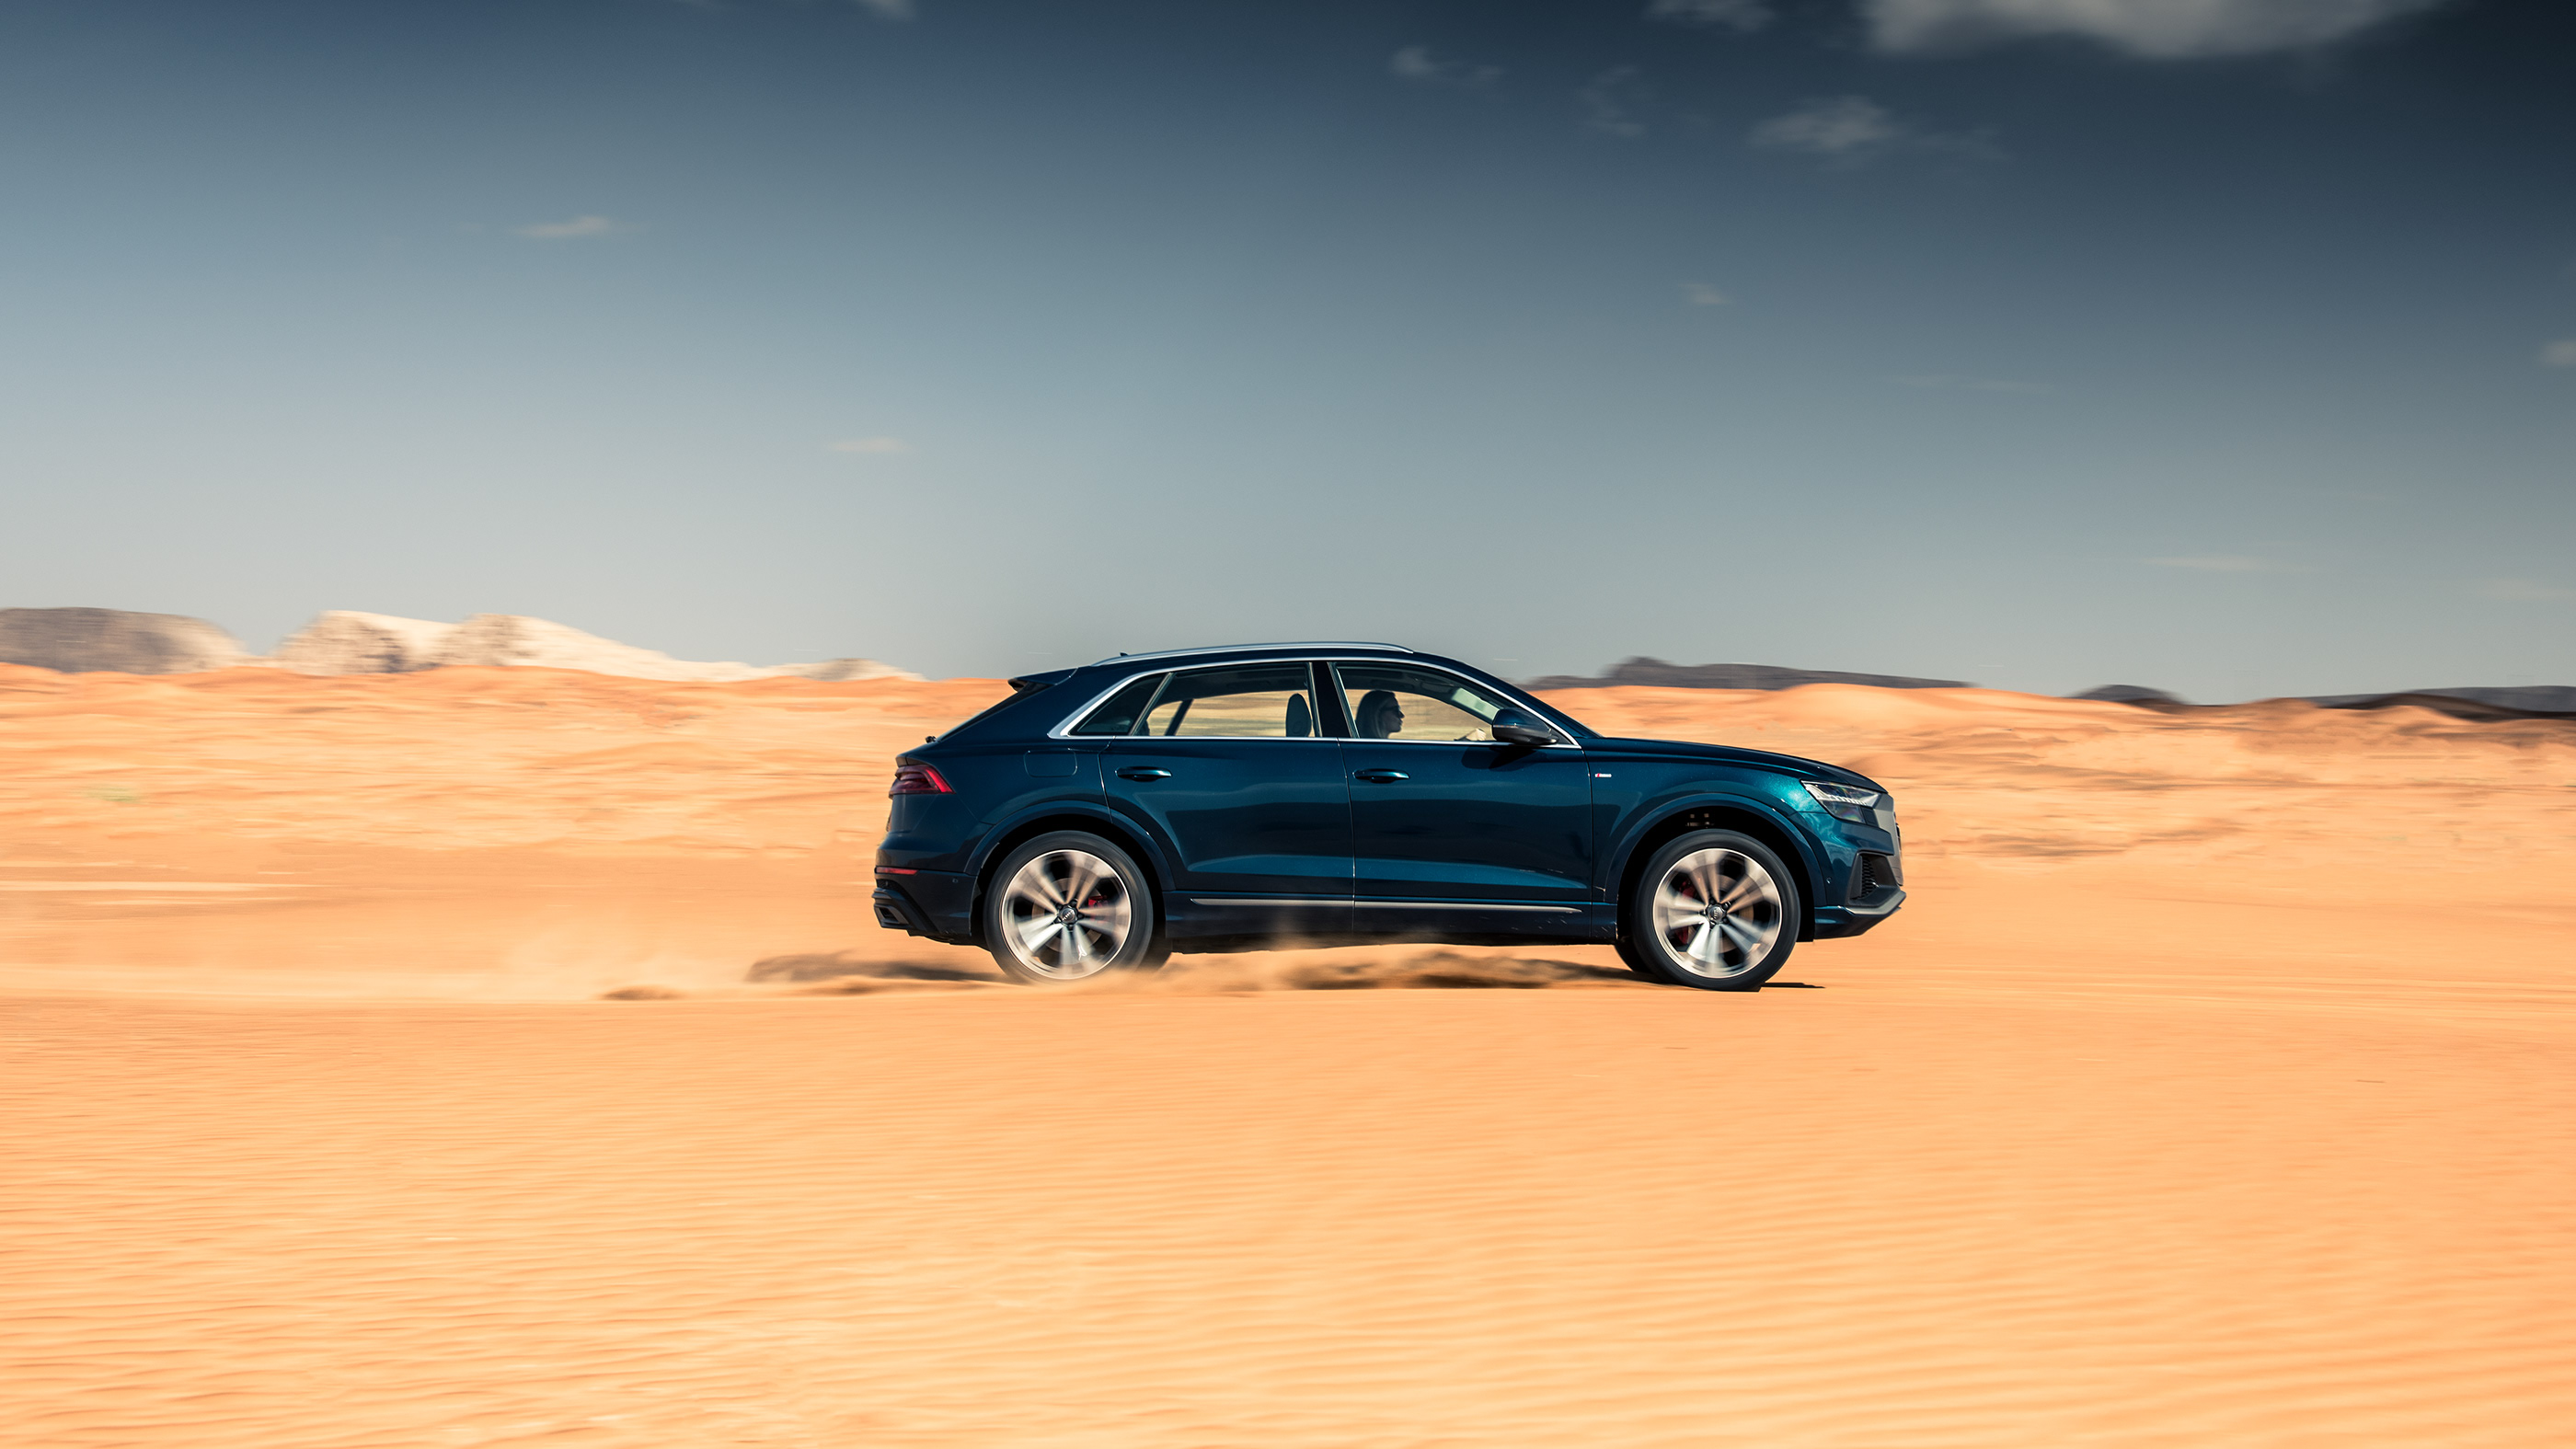 Audi Audi Q8 Blue Car Car Desert Luxury Car Suv 2800x1575